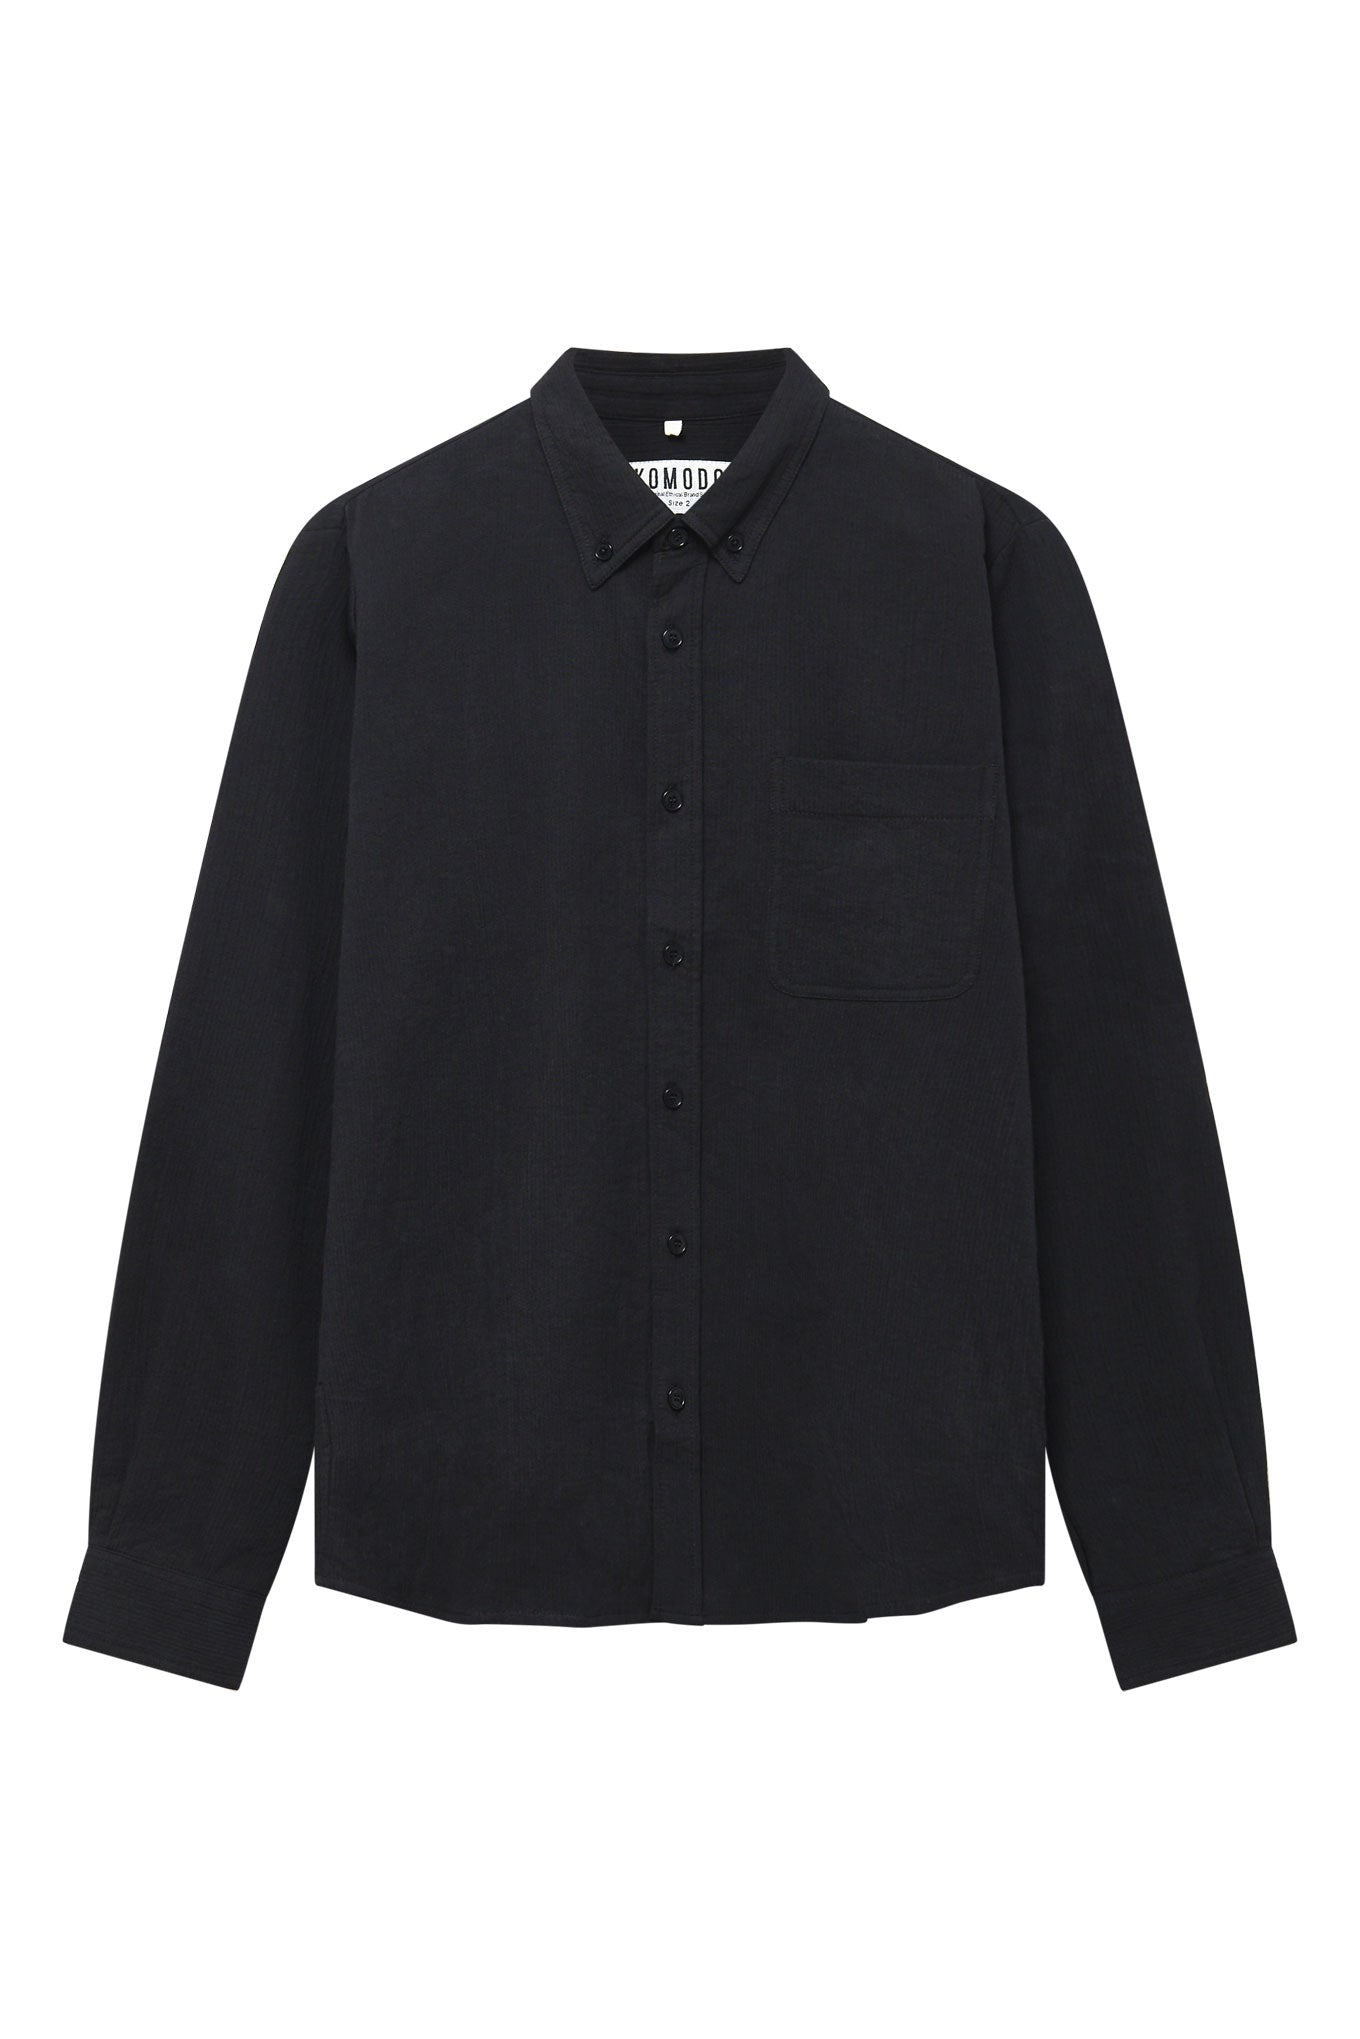 Black, long-sleeved SPECTER shirt made of organic cotton from Komodo